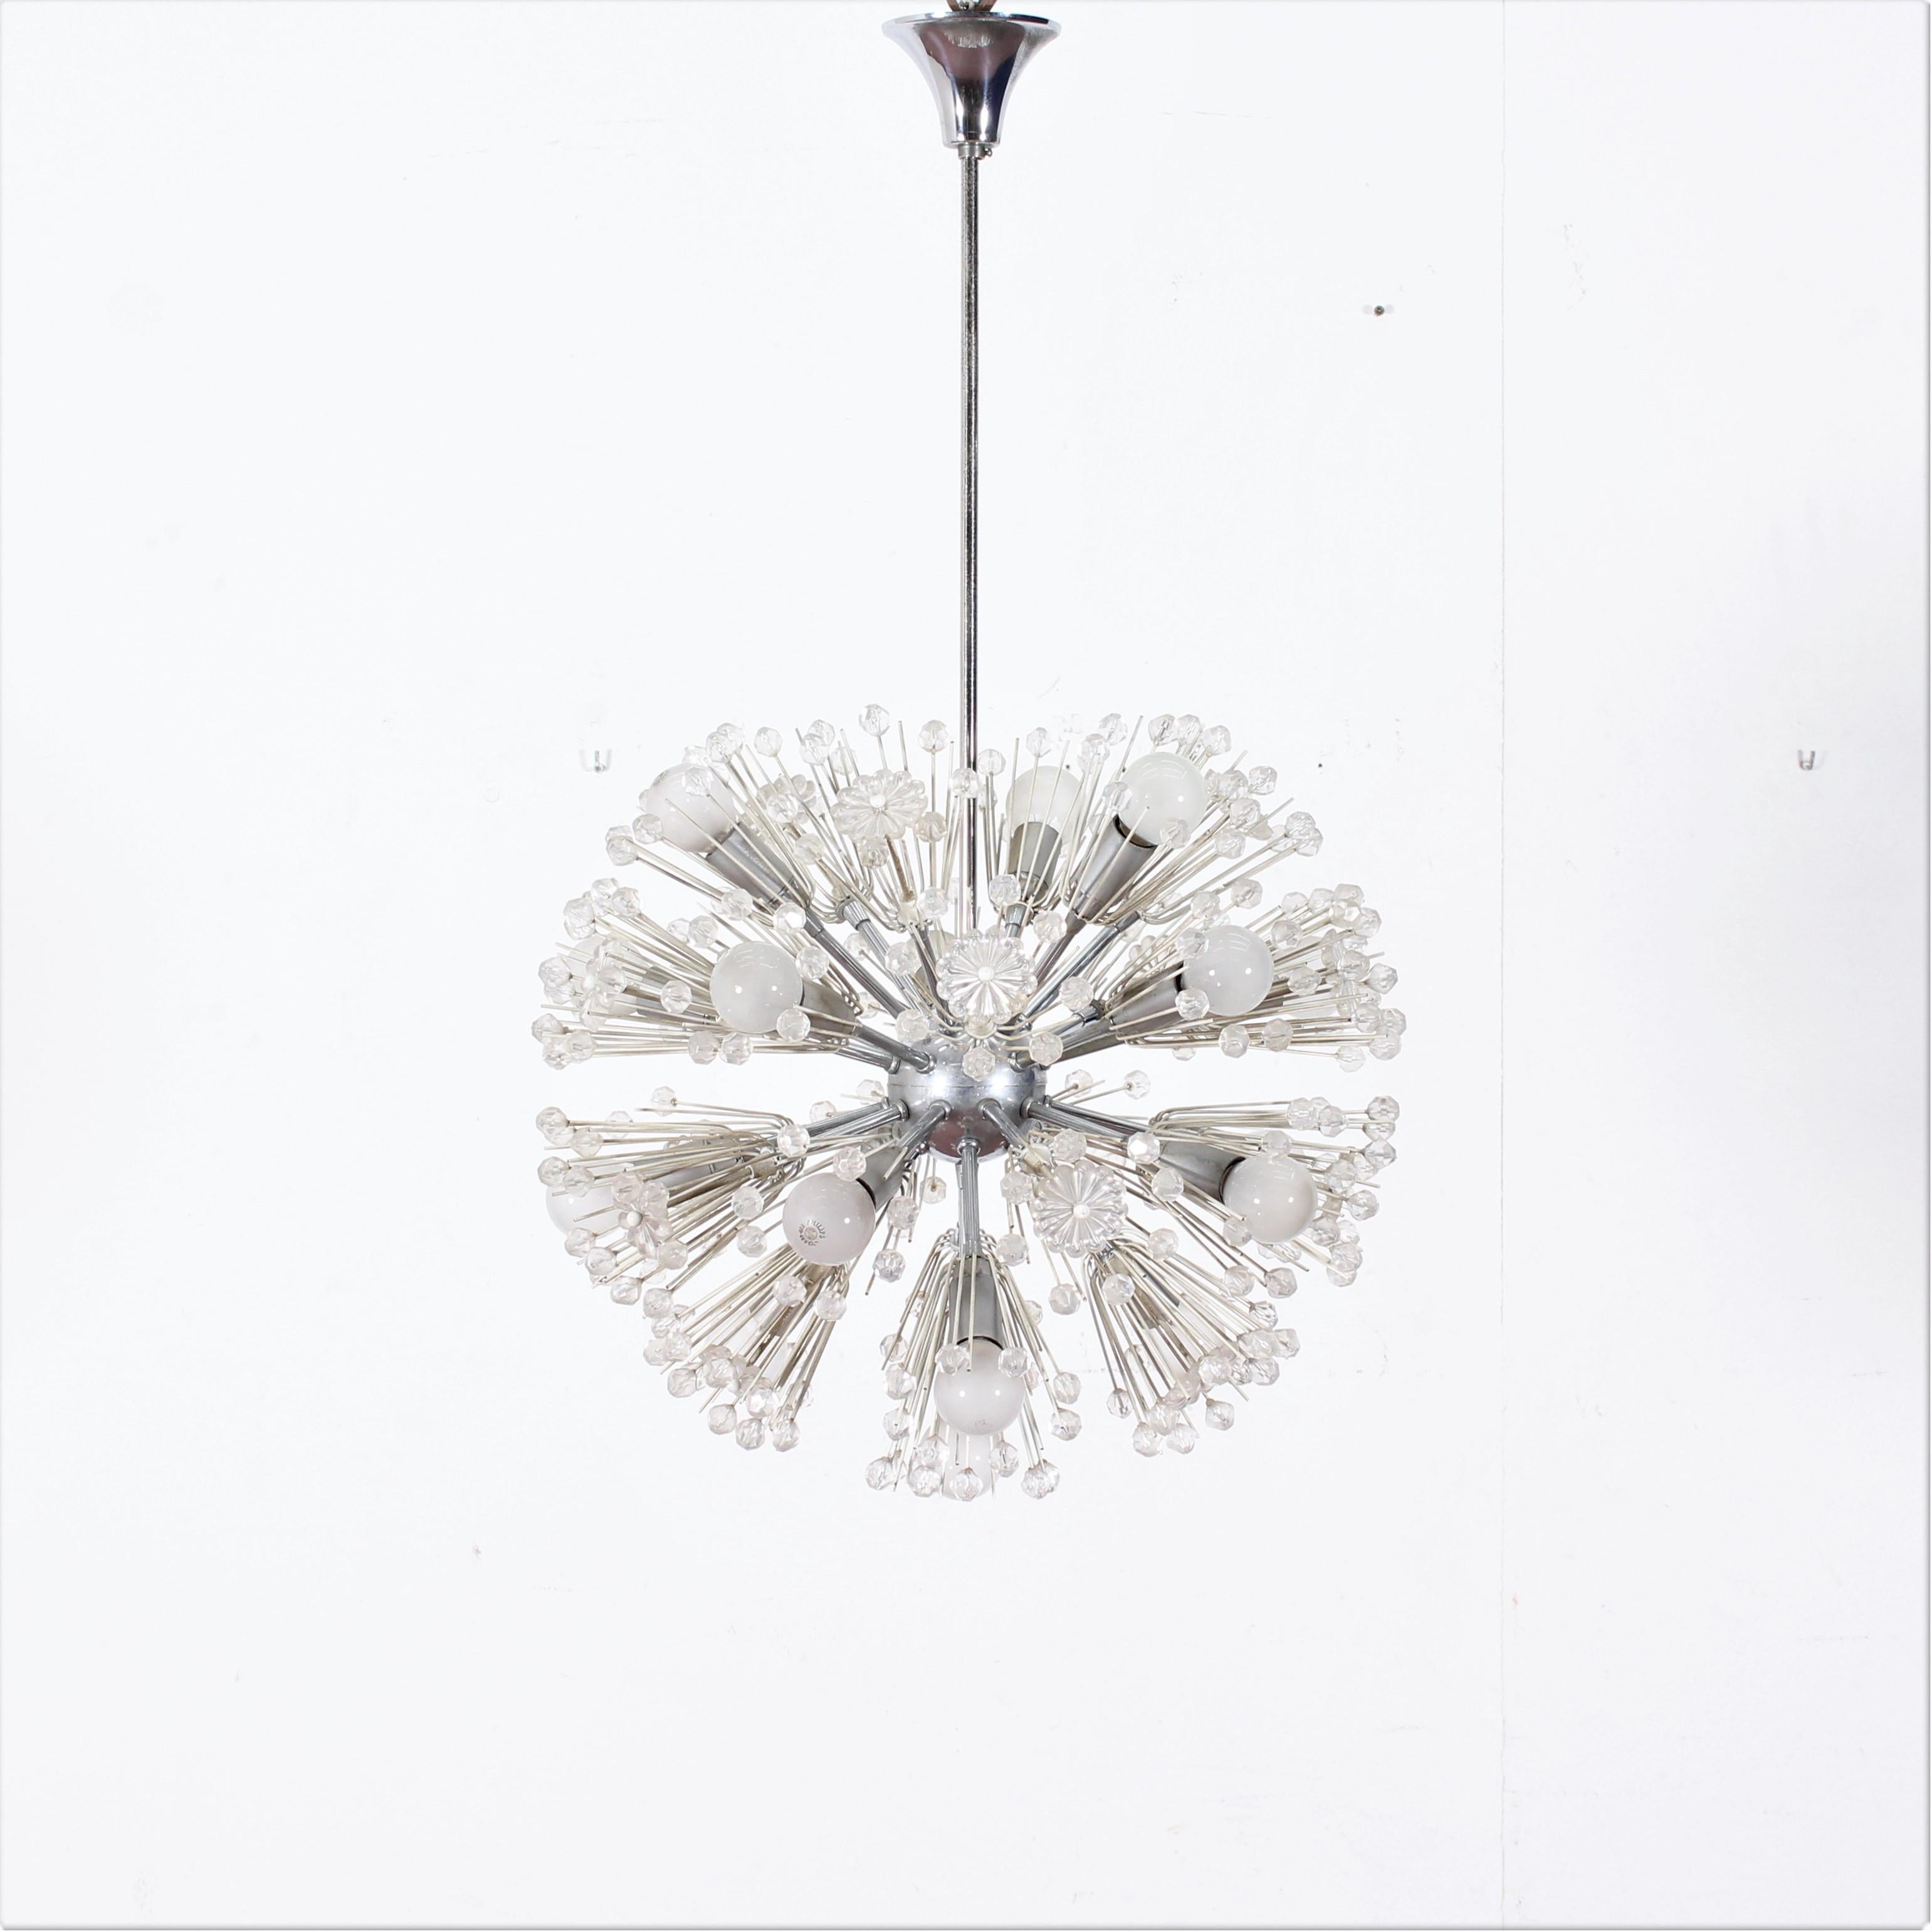 Original and very beautiful sputnik chandelier, 